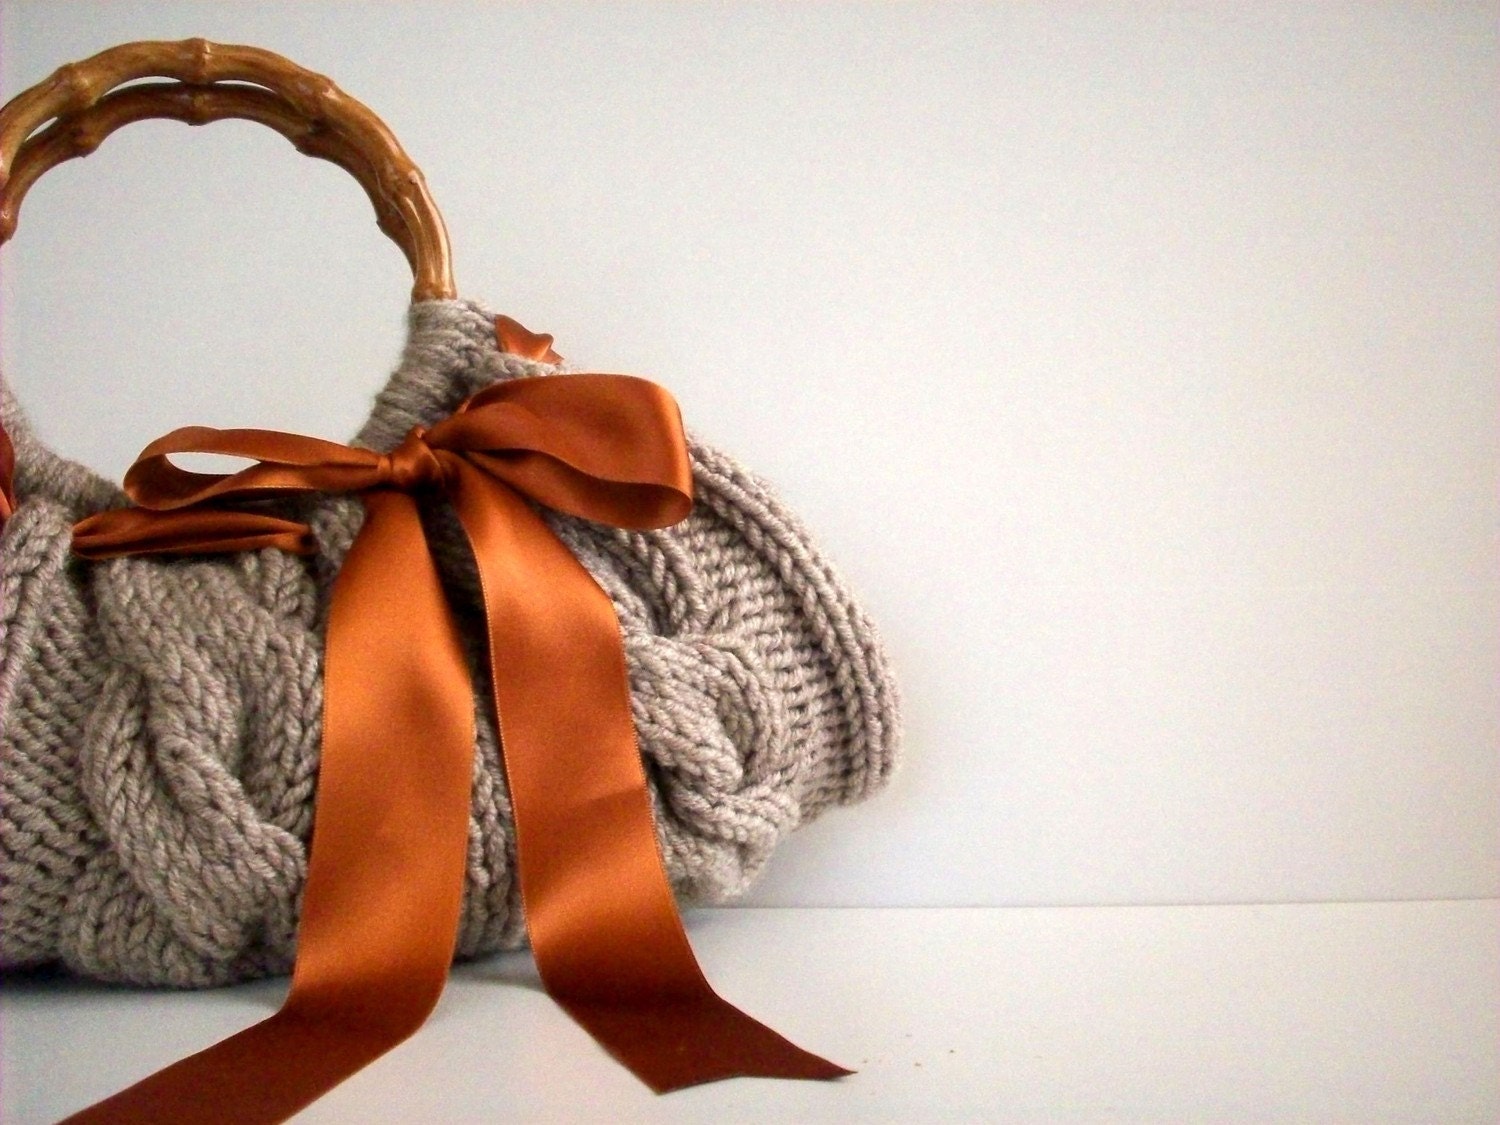 SALE OFF 20%, Knitted Handbag - Beige Bag Nr-0110 - NzLbags